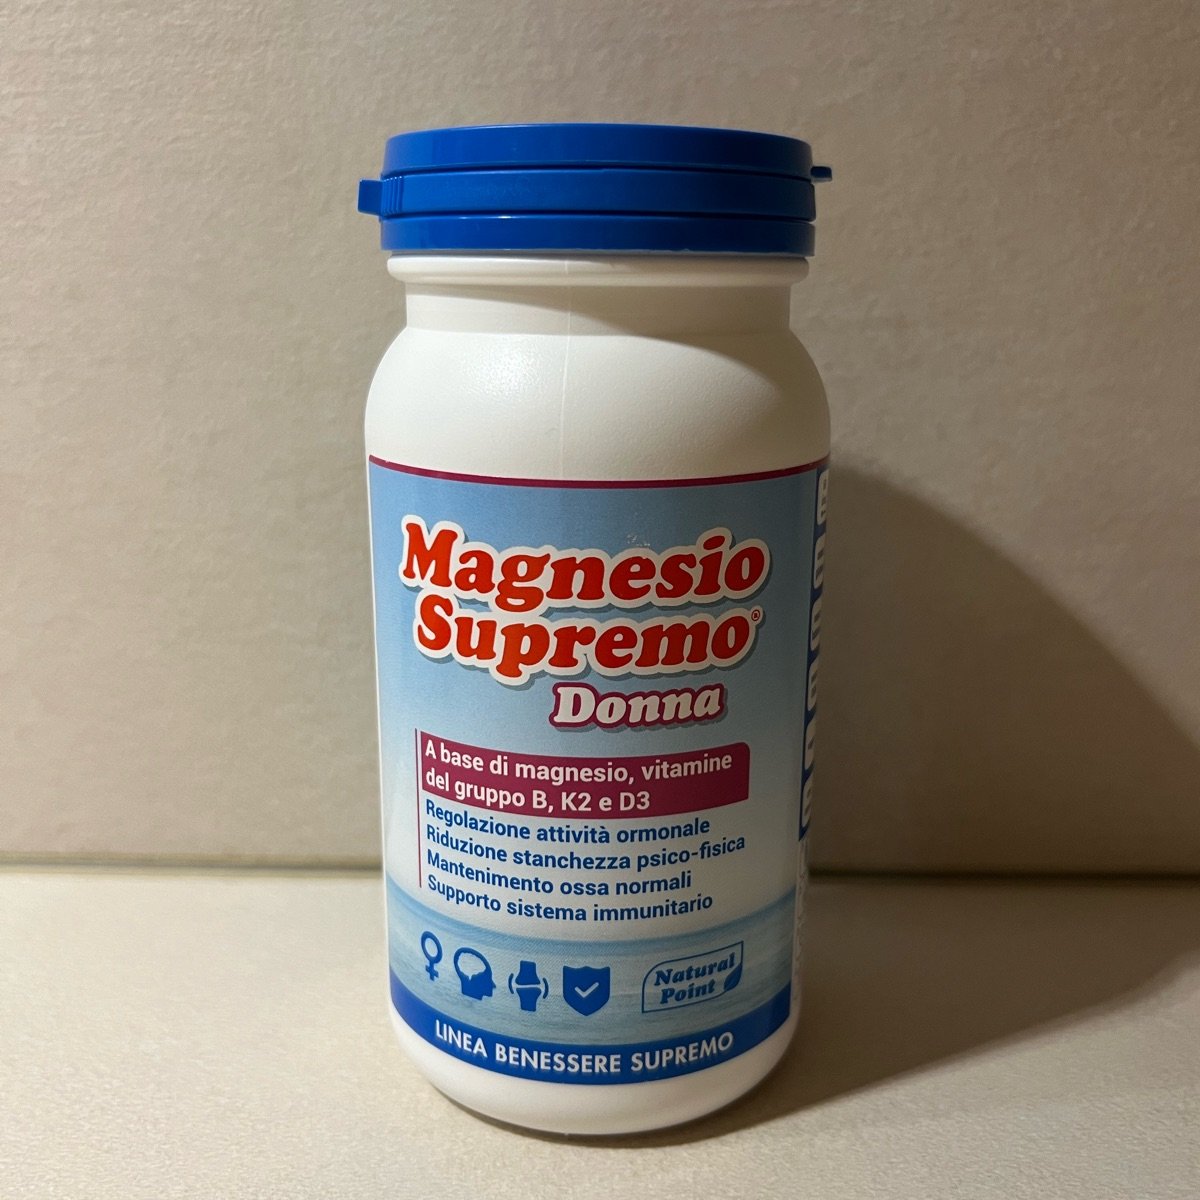 Natural Point Magnesio supremo donna Review | abillion